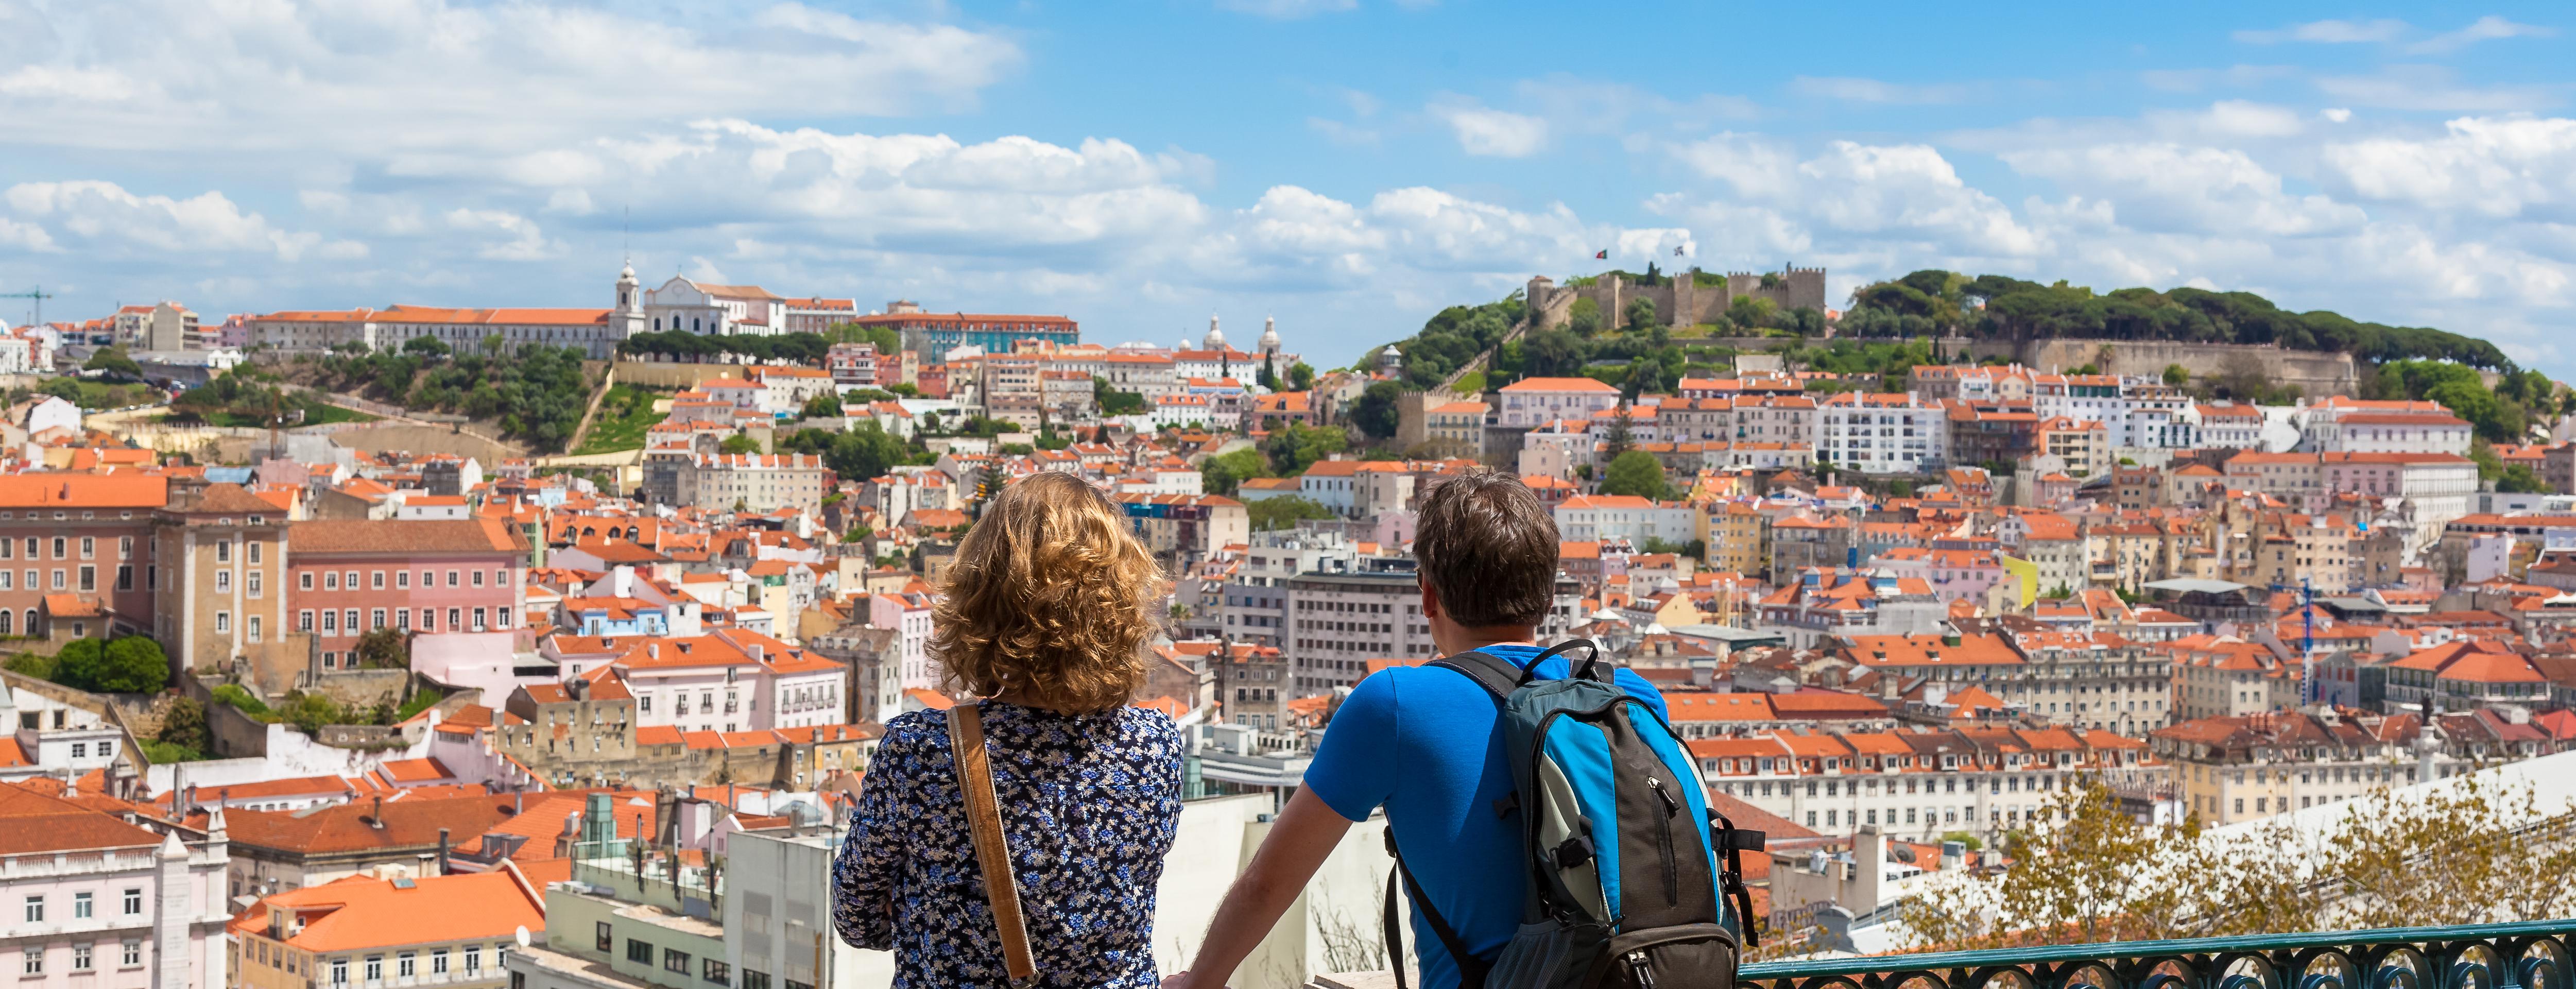 Tuk Tuk Tour of Lisbon with Panoramic Views of the City